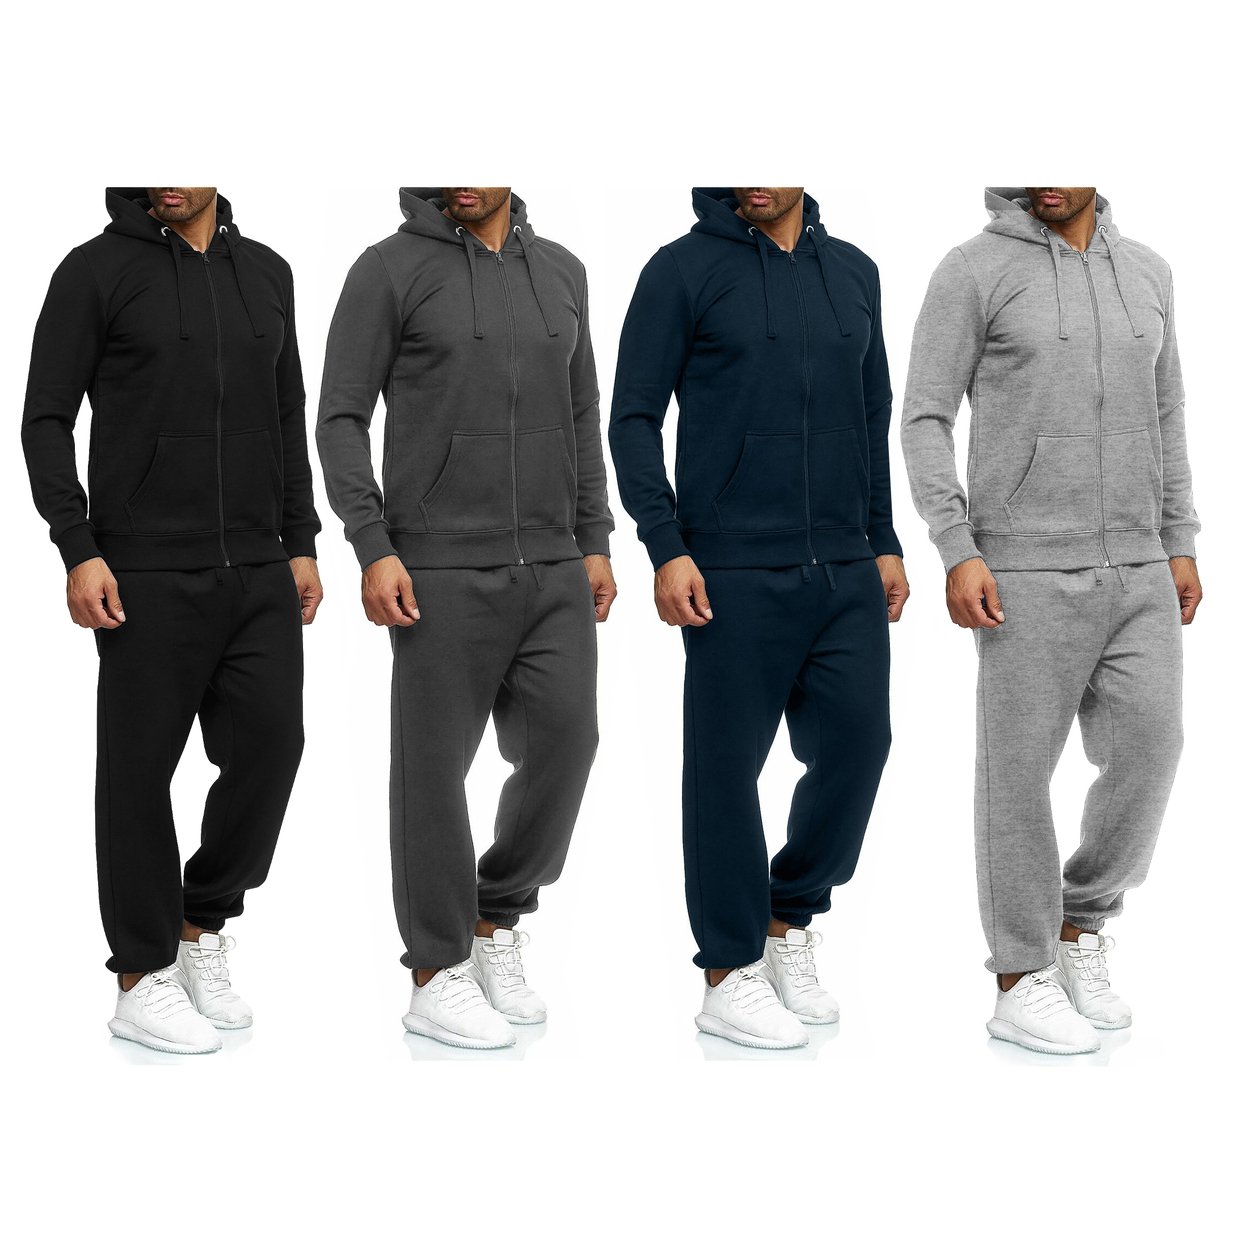 2/4-Piece: Men's Winter Warm Cozy Athletic Multi-Pockets BIG & TALL Sweatsuit Set - Grey, 1, 3xl